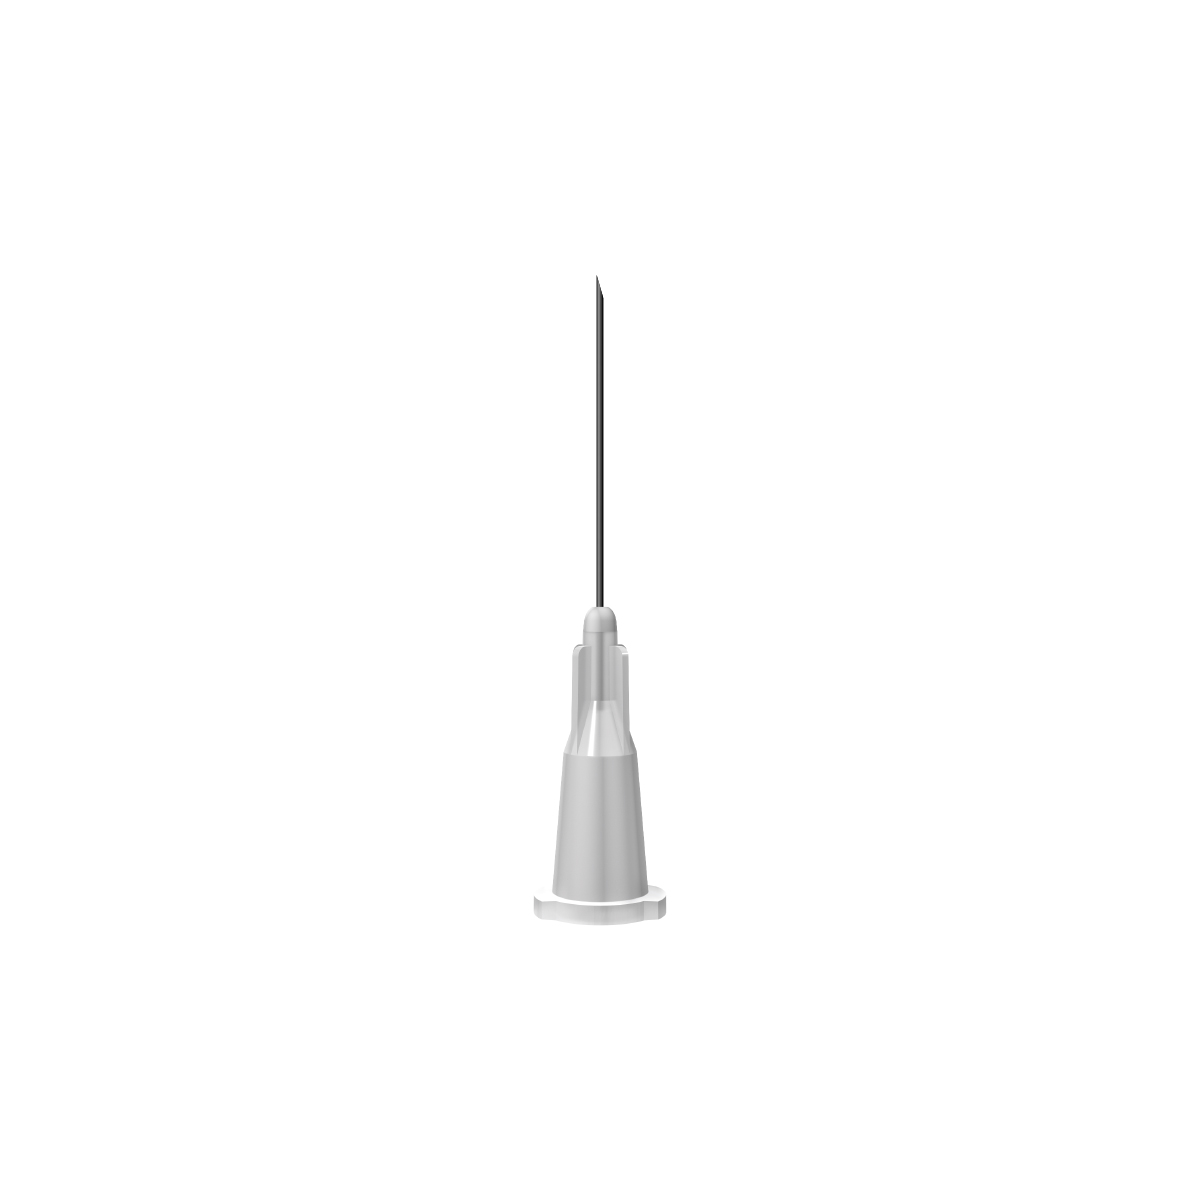 Terumo: Grey 27G 20mm (¾ inch) needle 